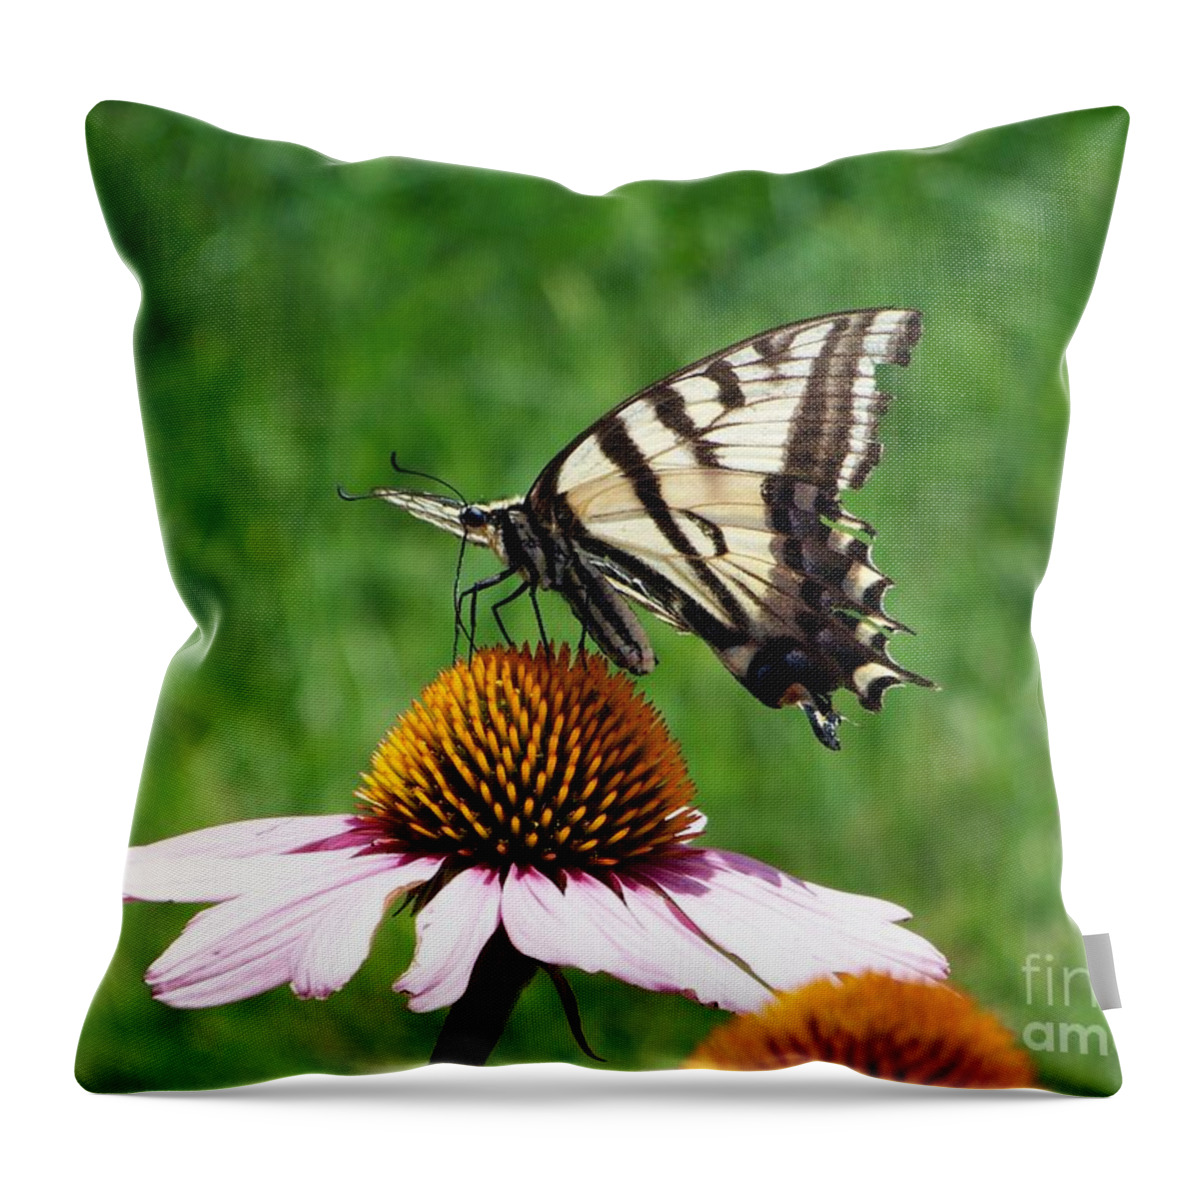 Butterflies Throw Pillow featuring the photograph Lunch Time by Dorrene BrownButterfield